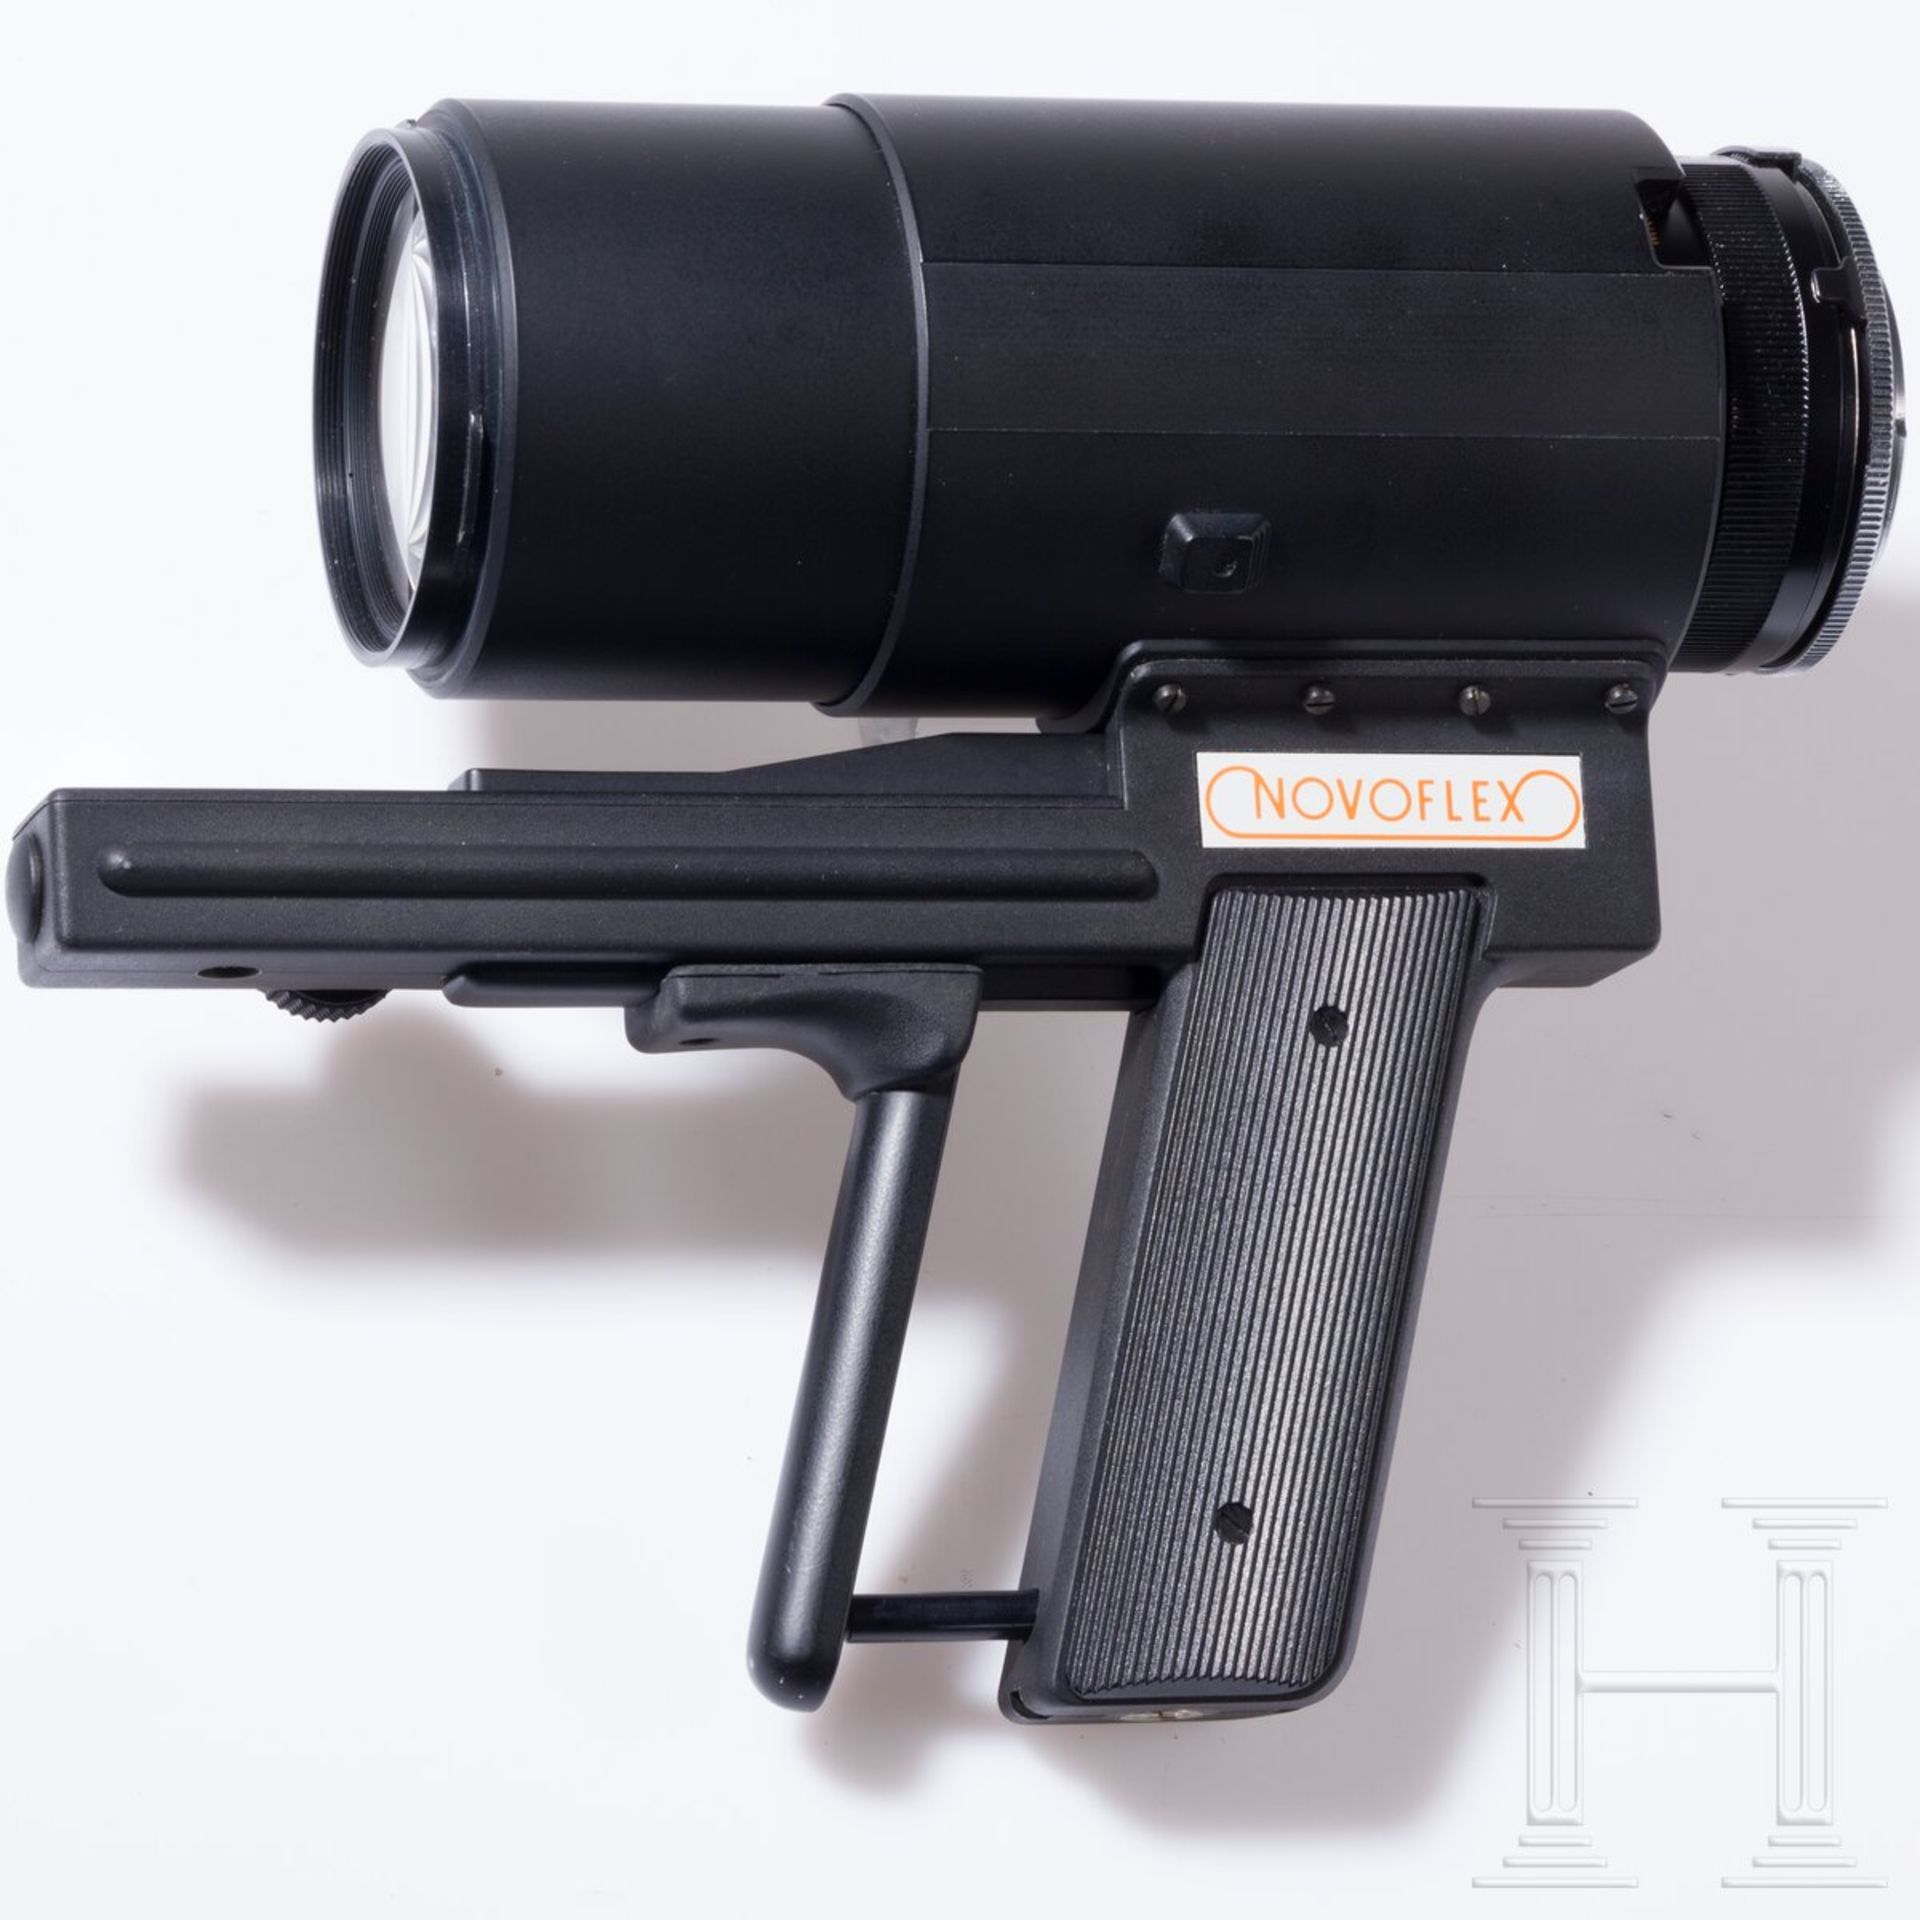 Novoflex-Schnellschuss-Objektiv 3,8 - 5,5/60-300 mm "Follow Focus Lenses" - Image 3 of 6